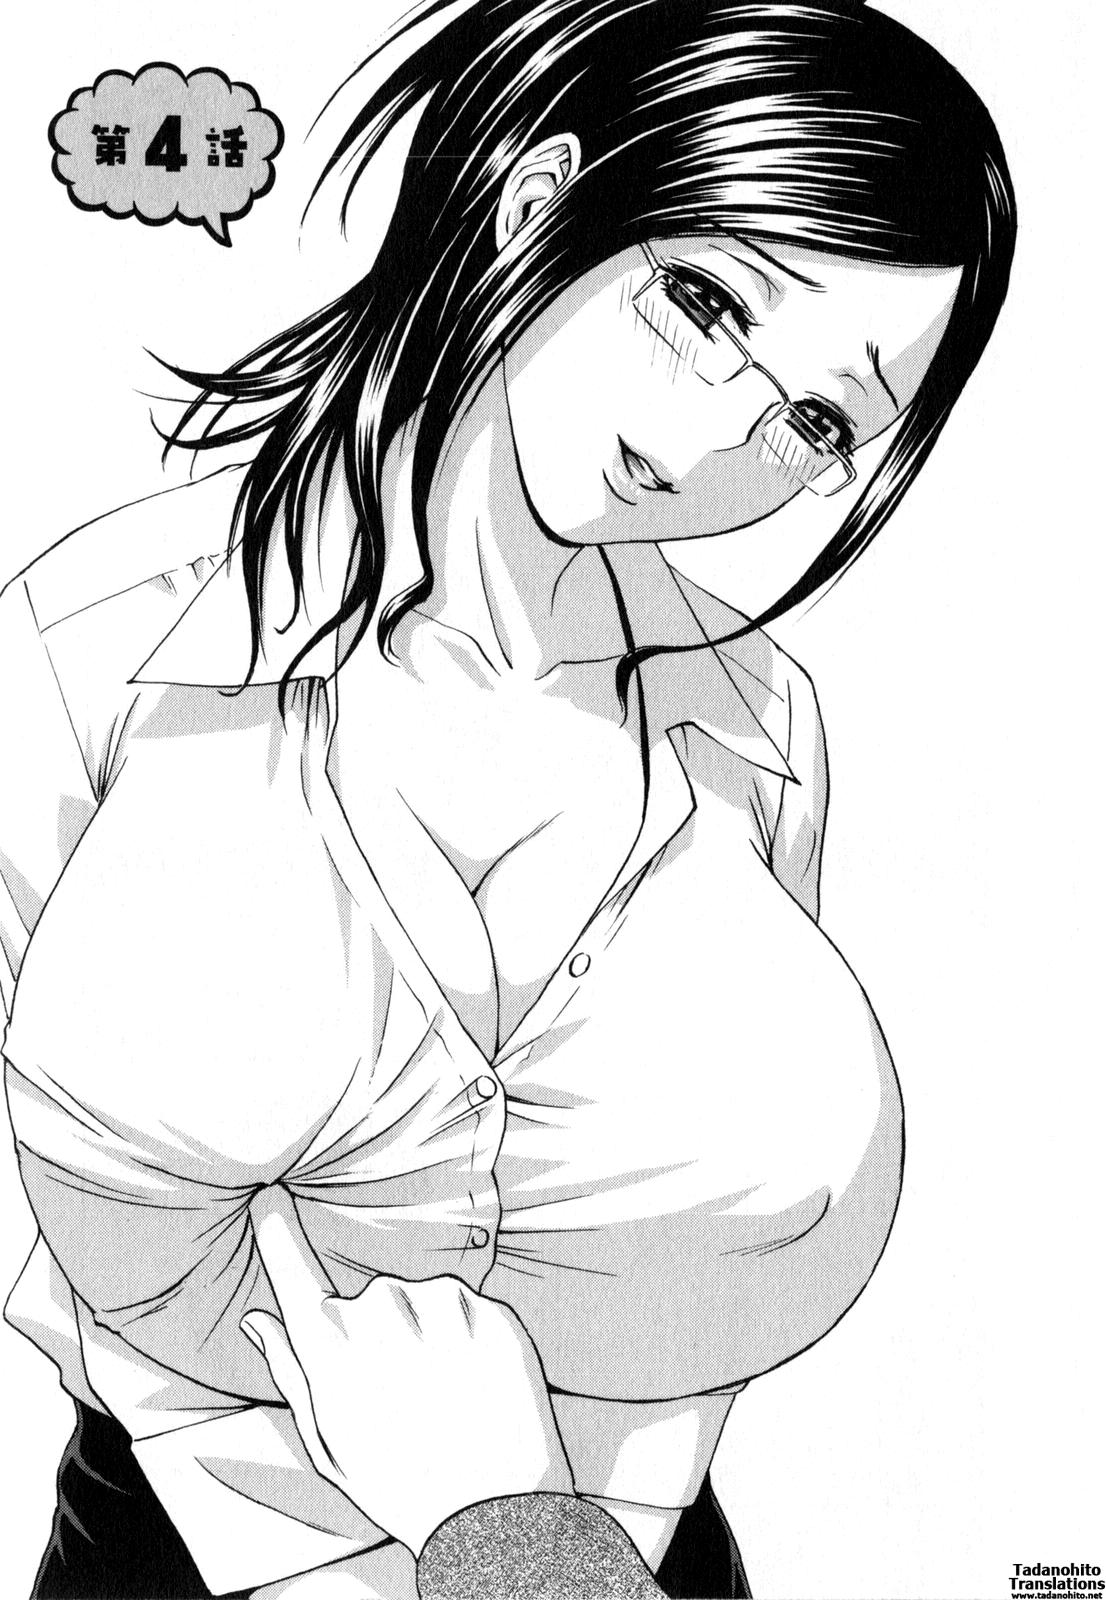 [Hidemaru] Life with Married Women Just Like a Manga 2 - Ch. 1-7 [English] {Tadanohito} 67